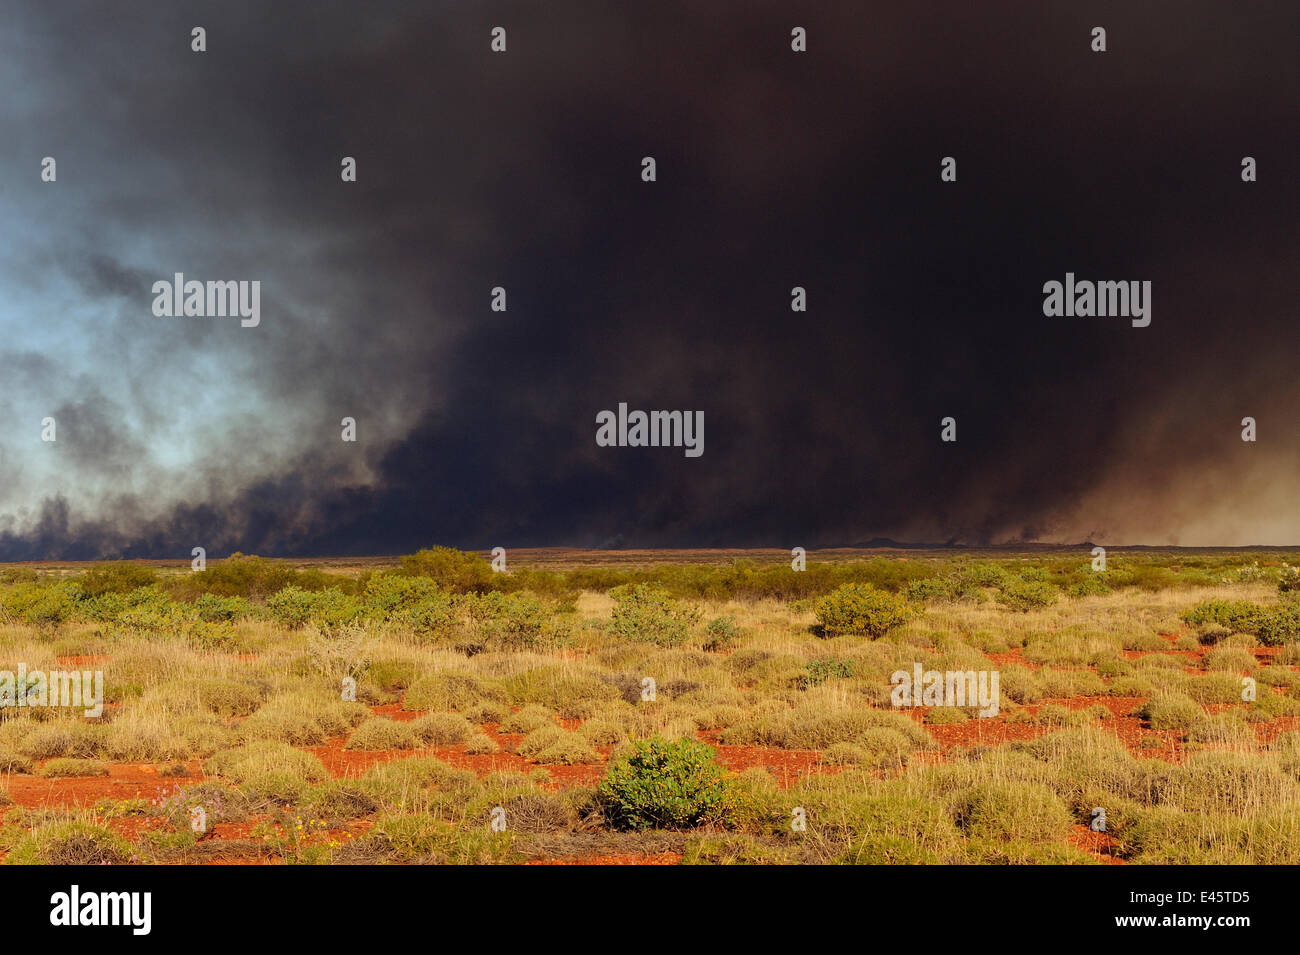 Smoke from bush fire in Pilbara region, Western Australia. August 2009 Stock Photo